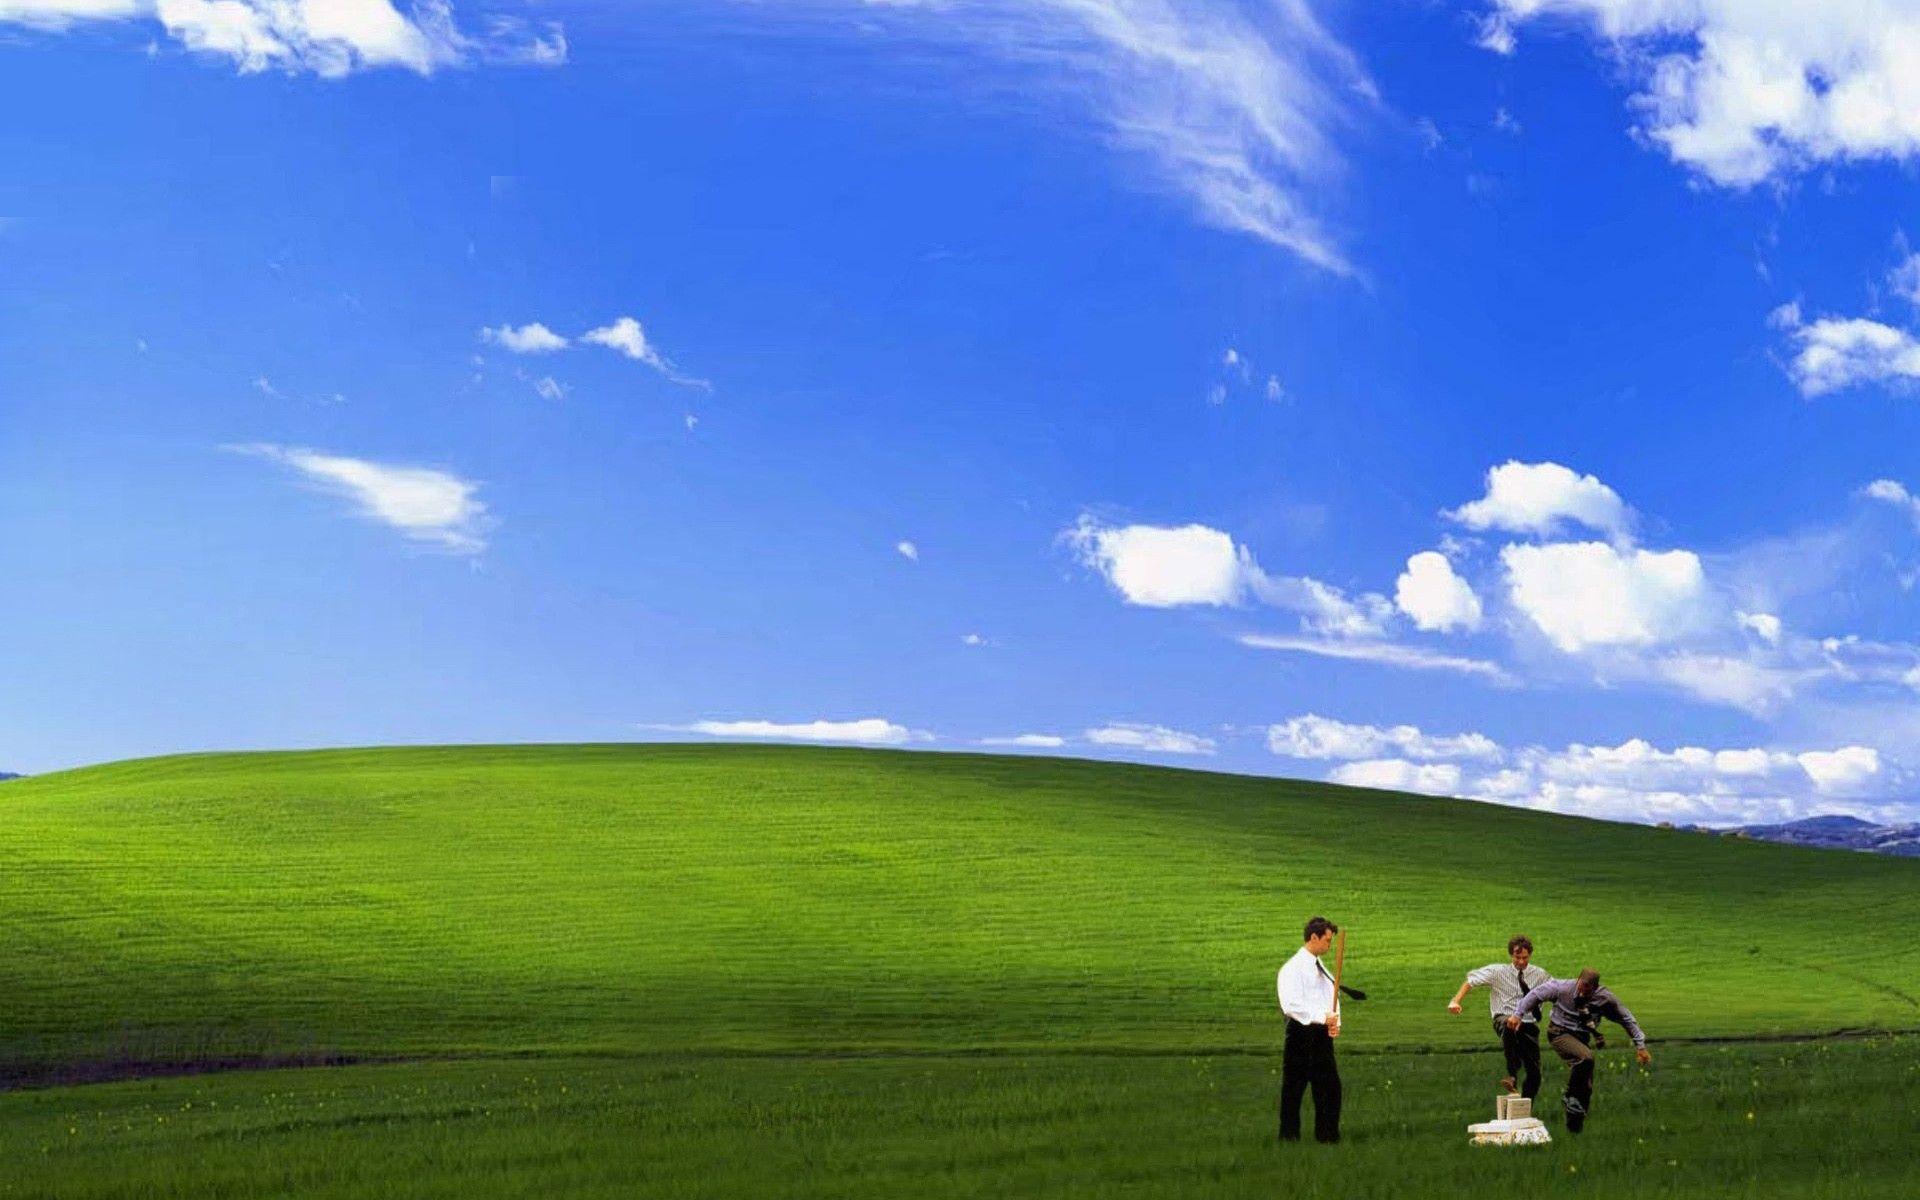 Windows Xp Wallpaper Bliss